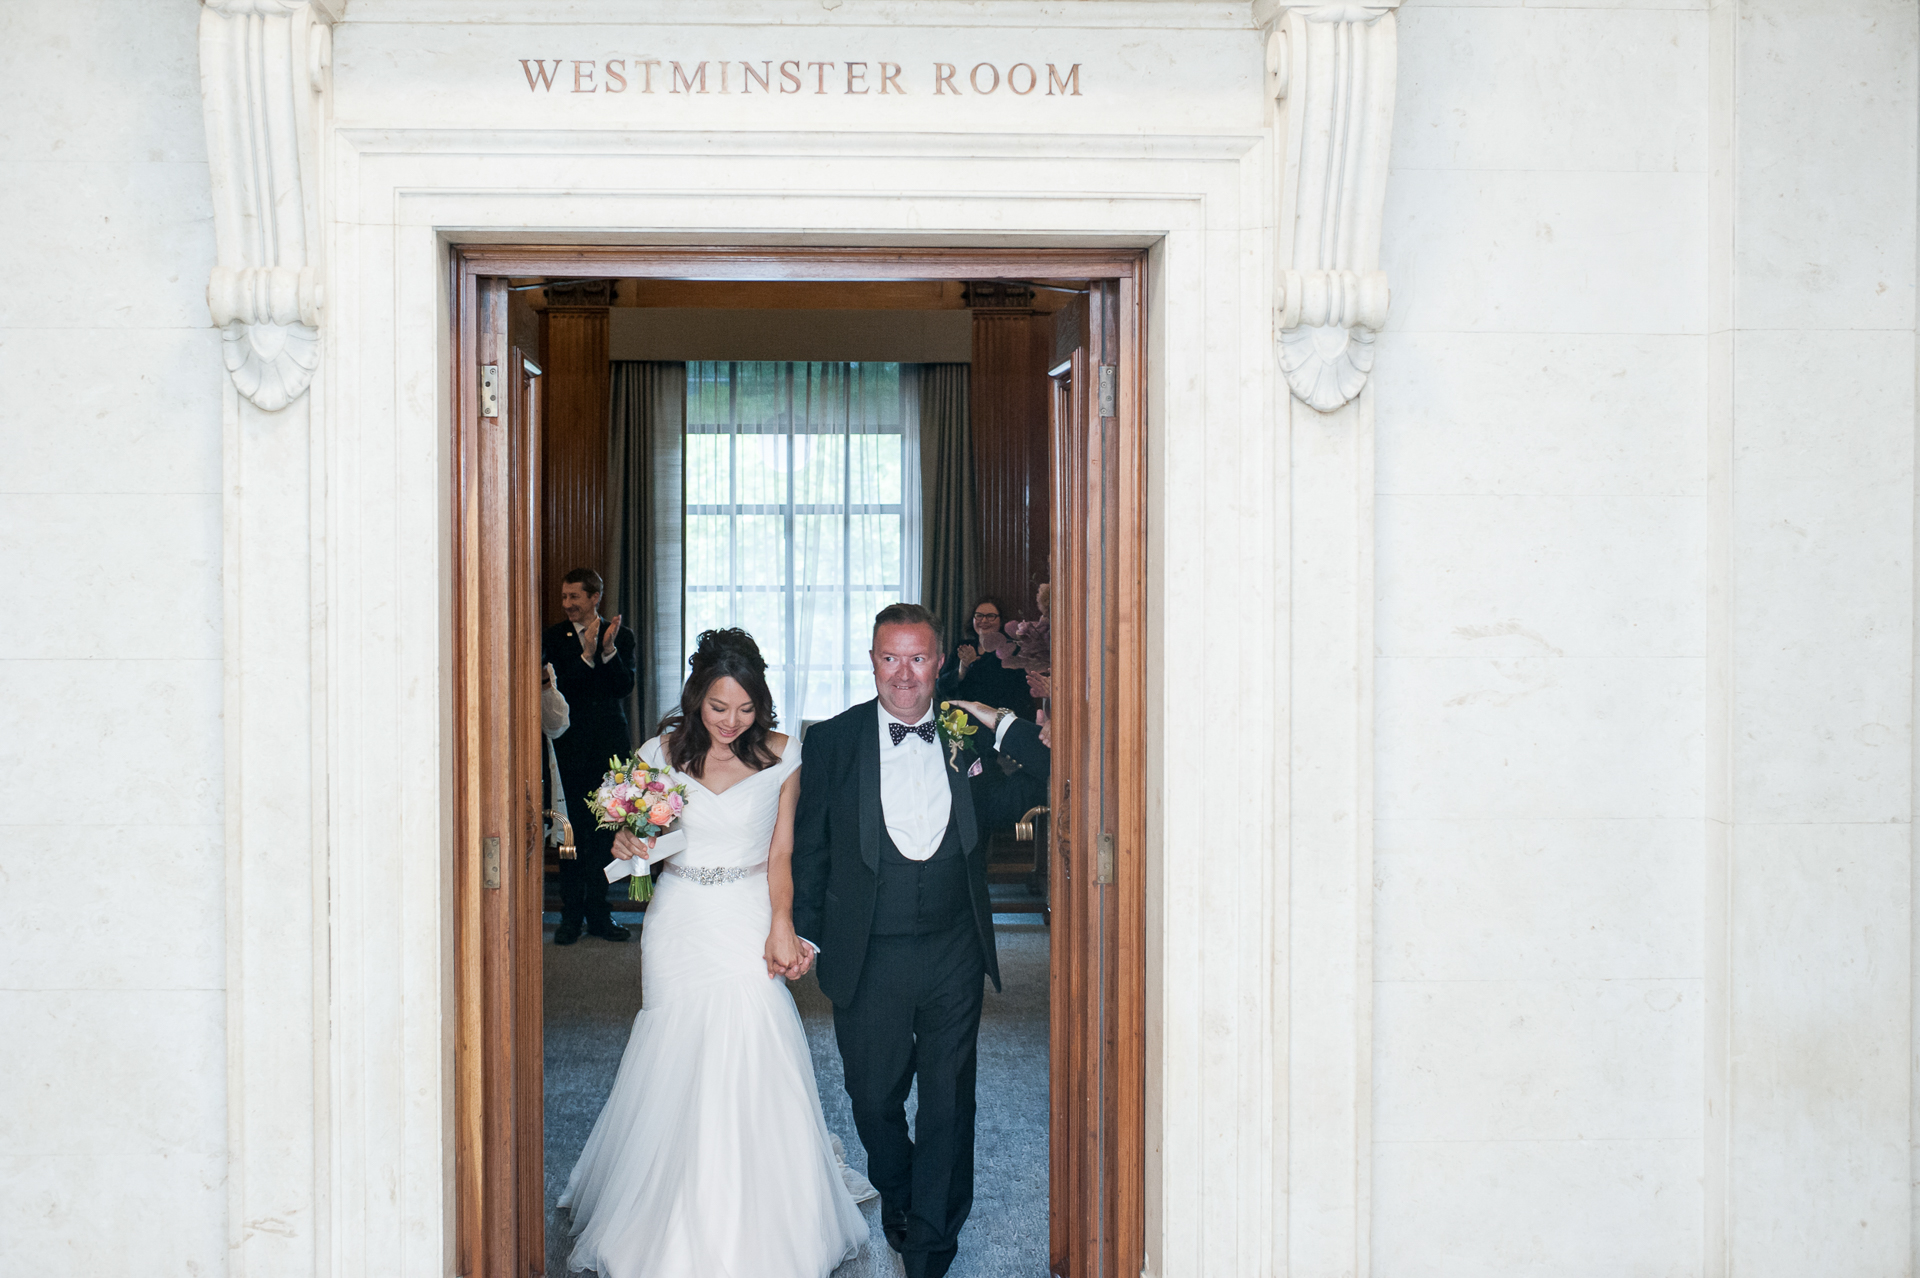 Marylebone Town Hall wedding photography, Alexandria Hall Photography (19 of 39).jpg